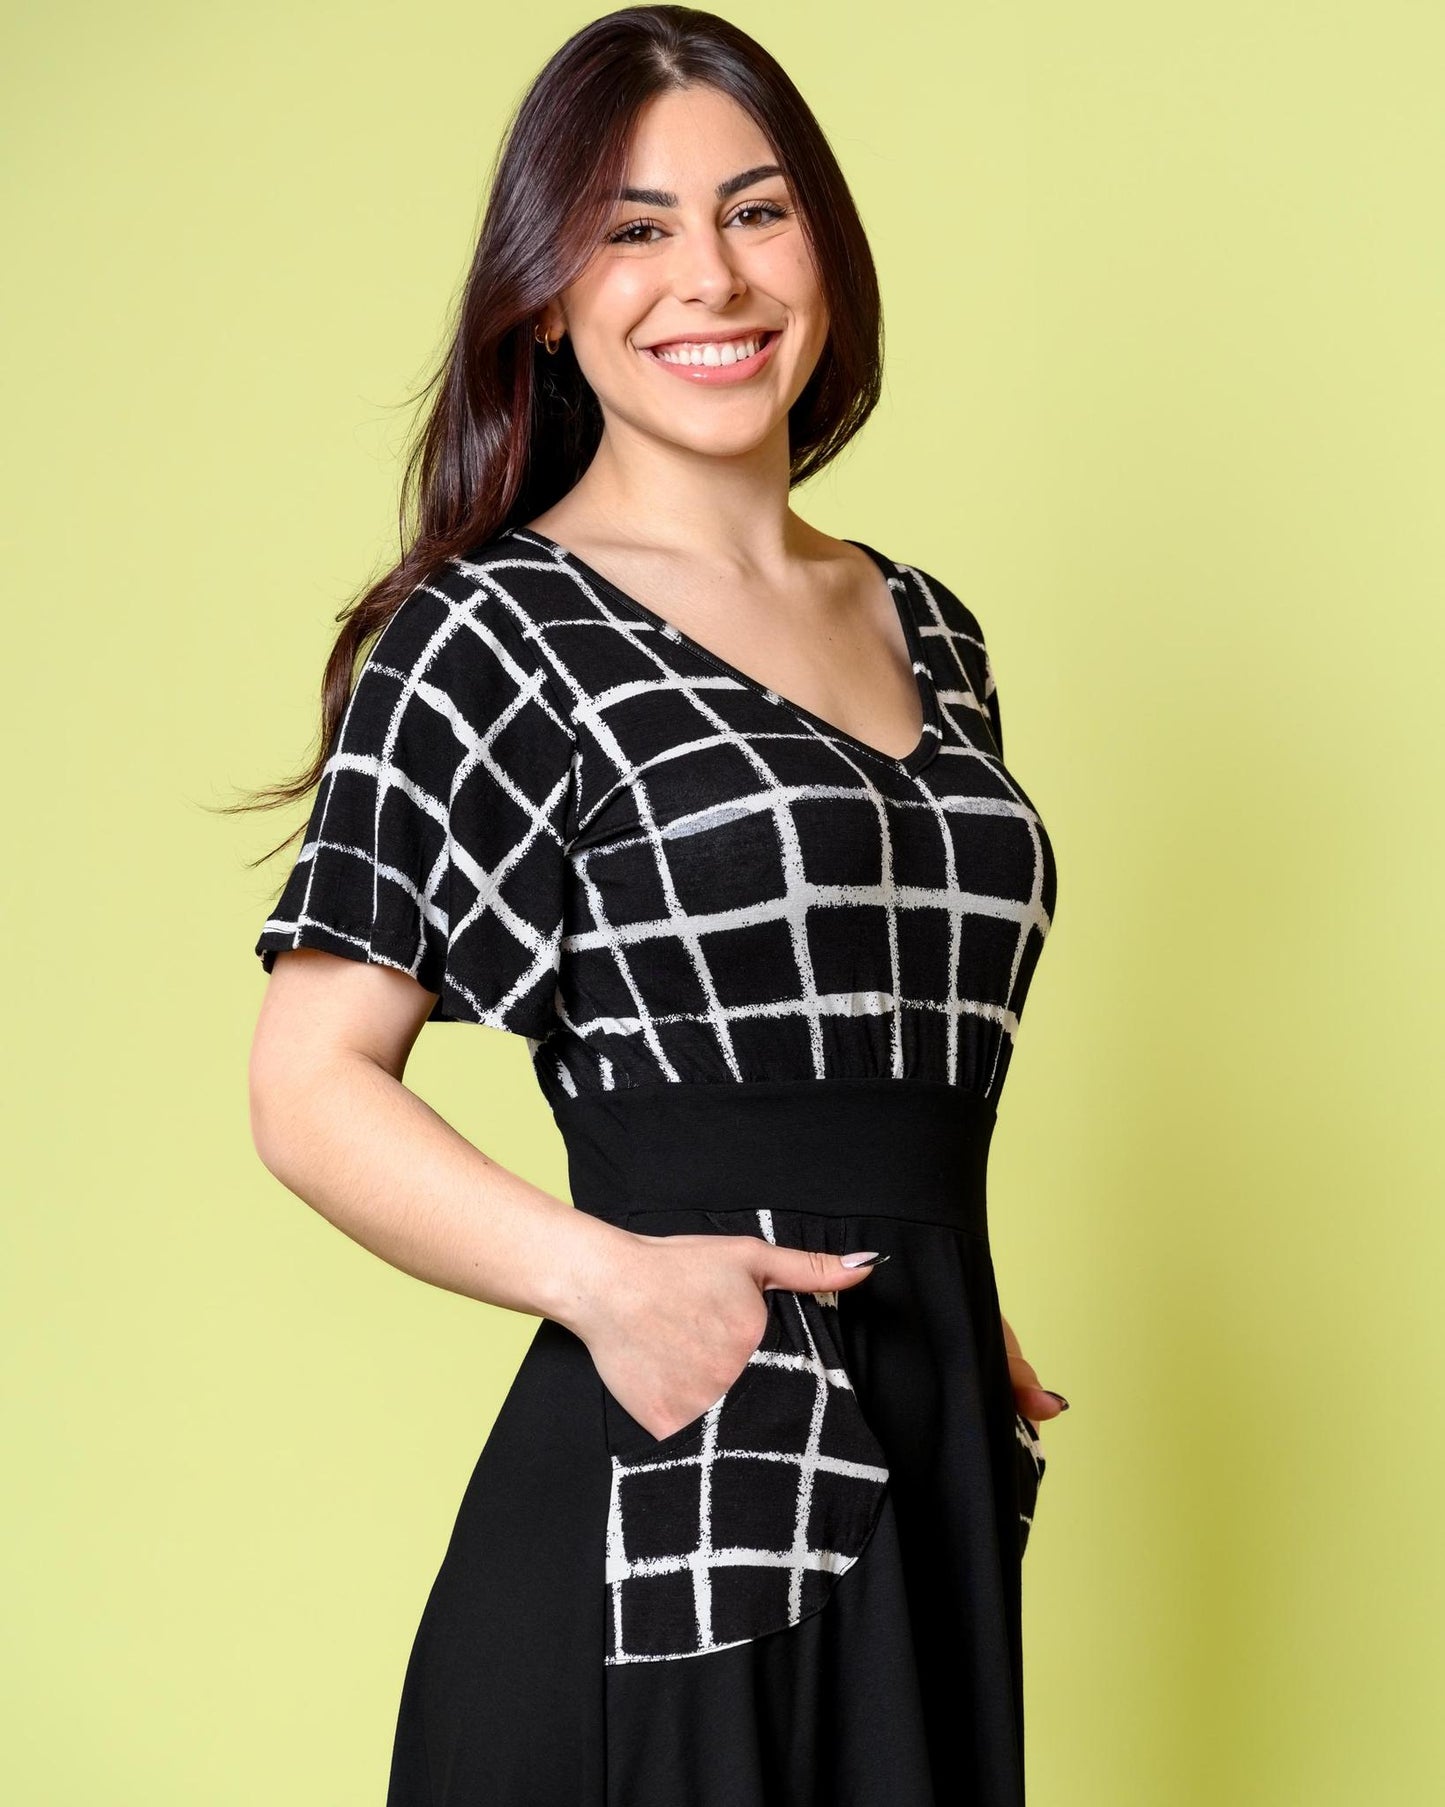 Squasht Alina Dress in Black and White Grid Print - Size Small, Medium